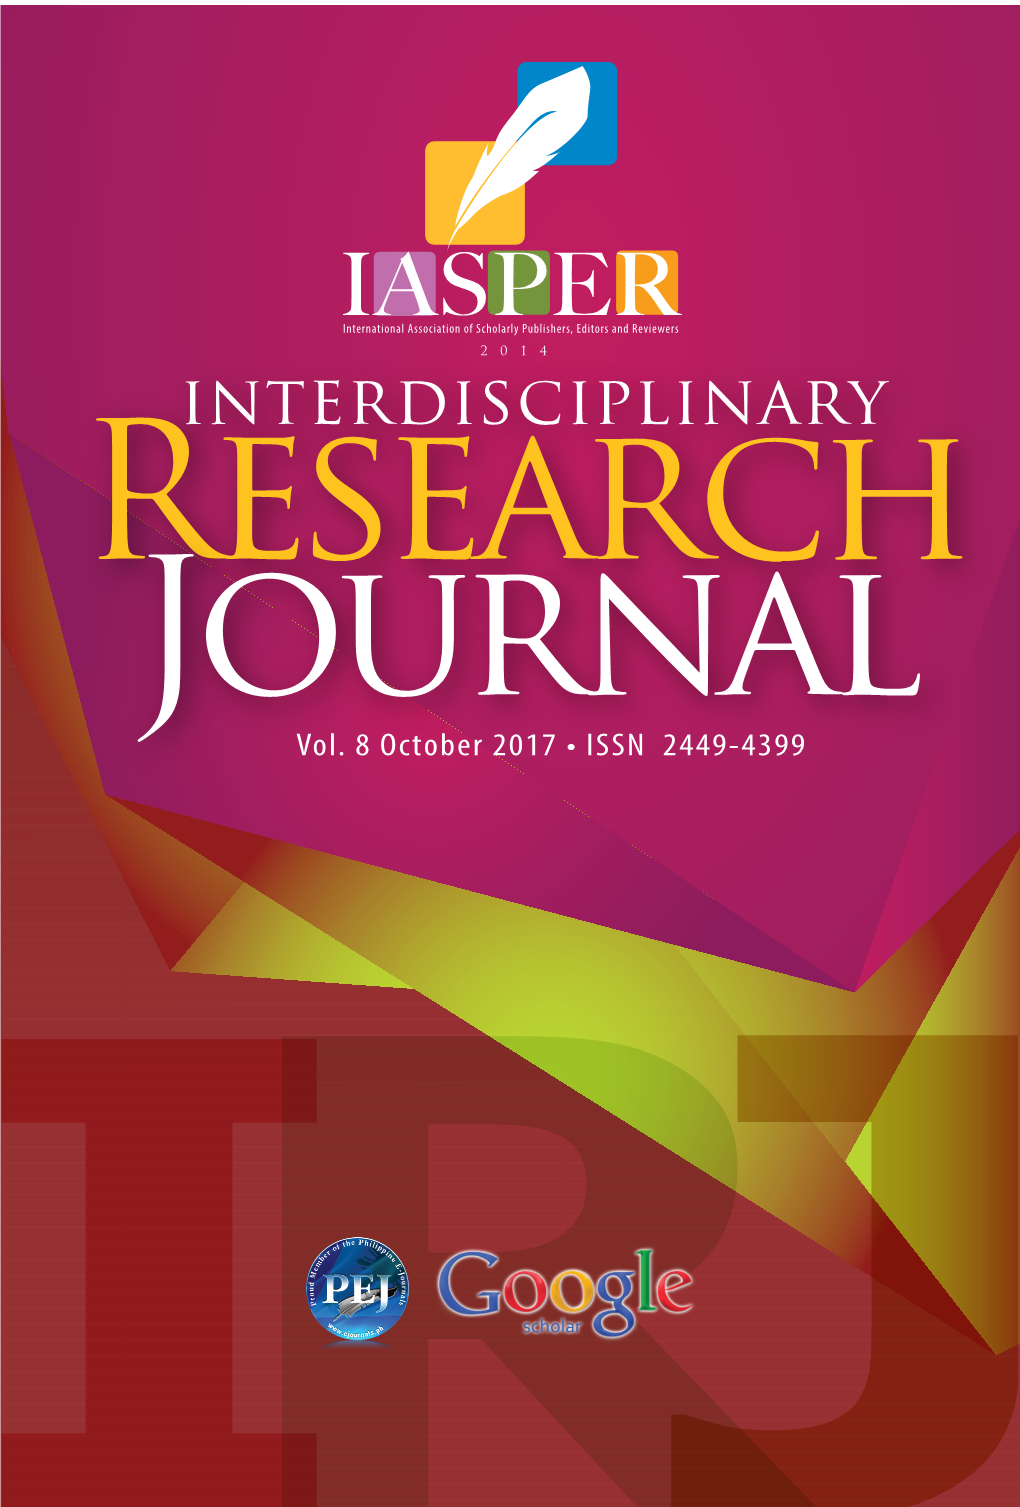 Interdisciplinary Research Journal Volume 8 • October 2017 Editorial Board Editor in Chief